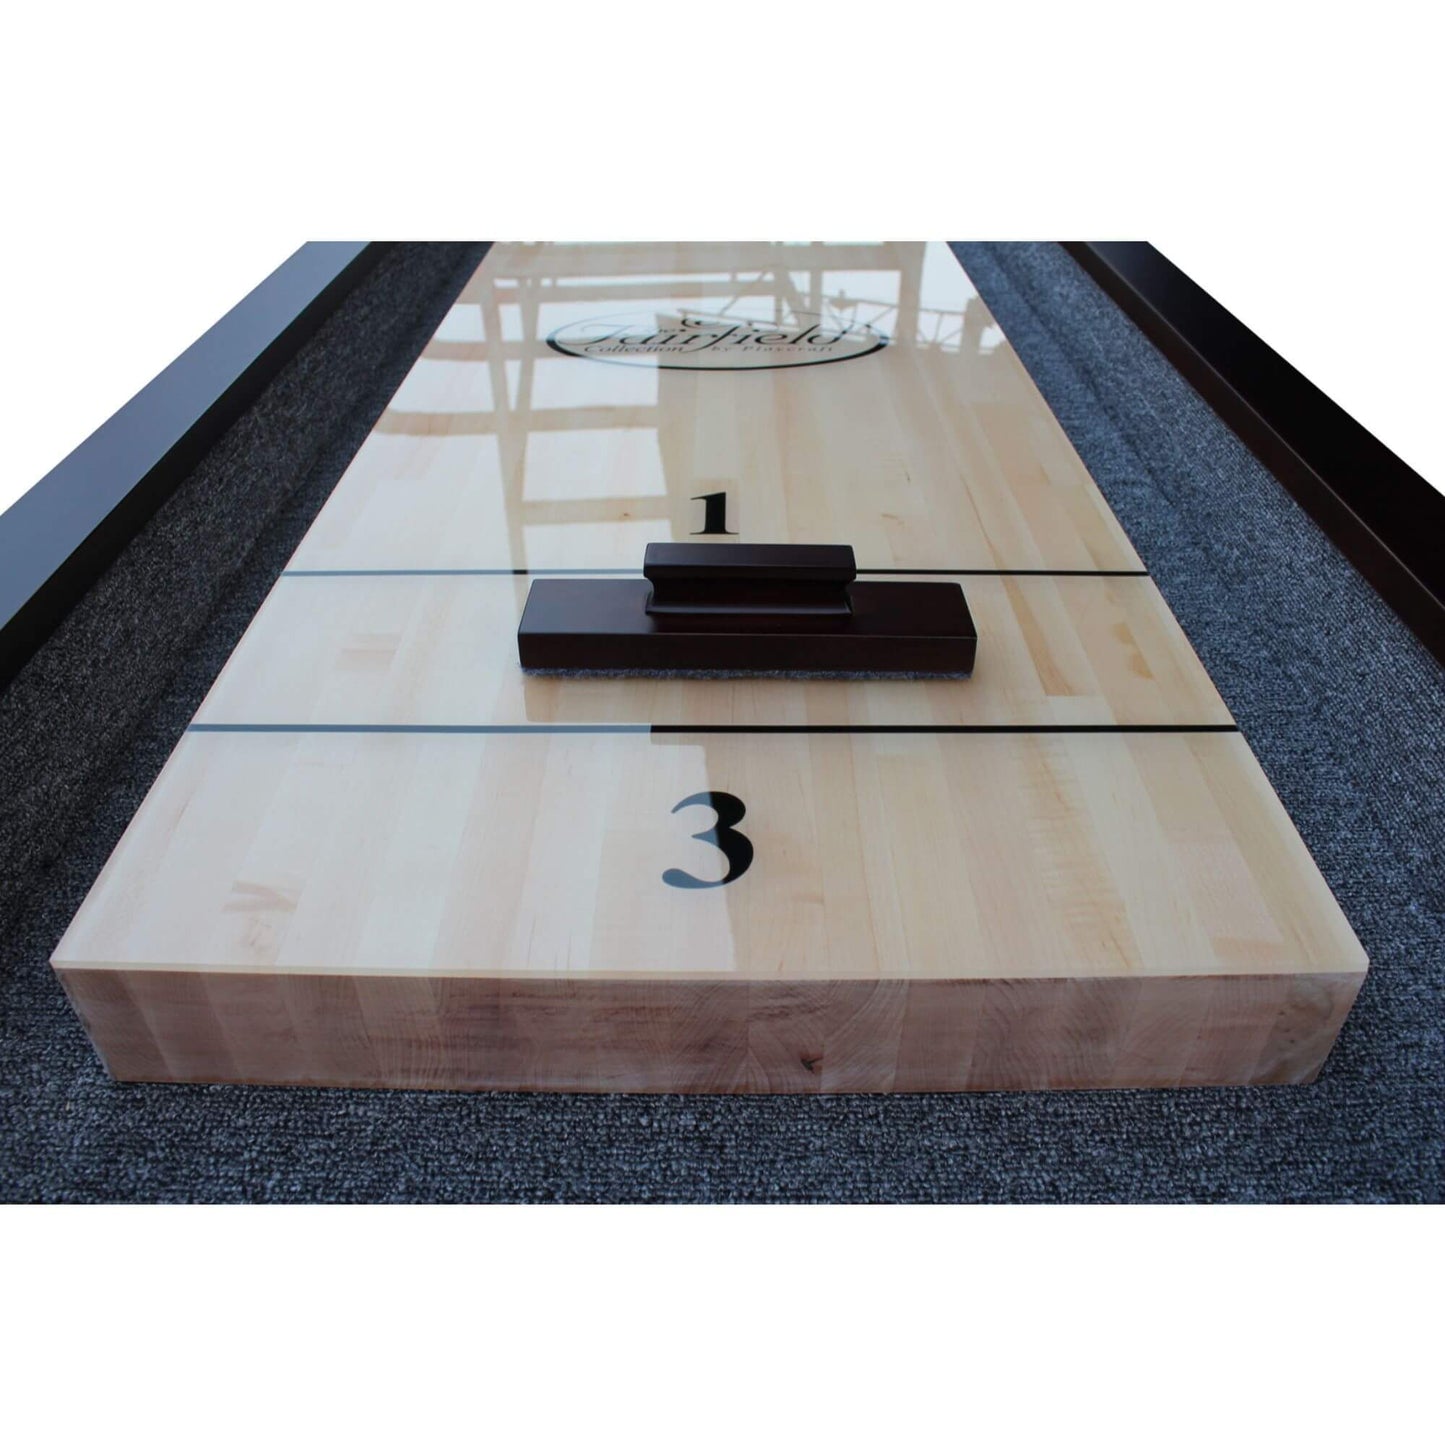 Playcraft St. Lawrence Pro-Series Shuffleboard Table - Upper Livin